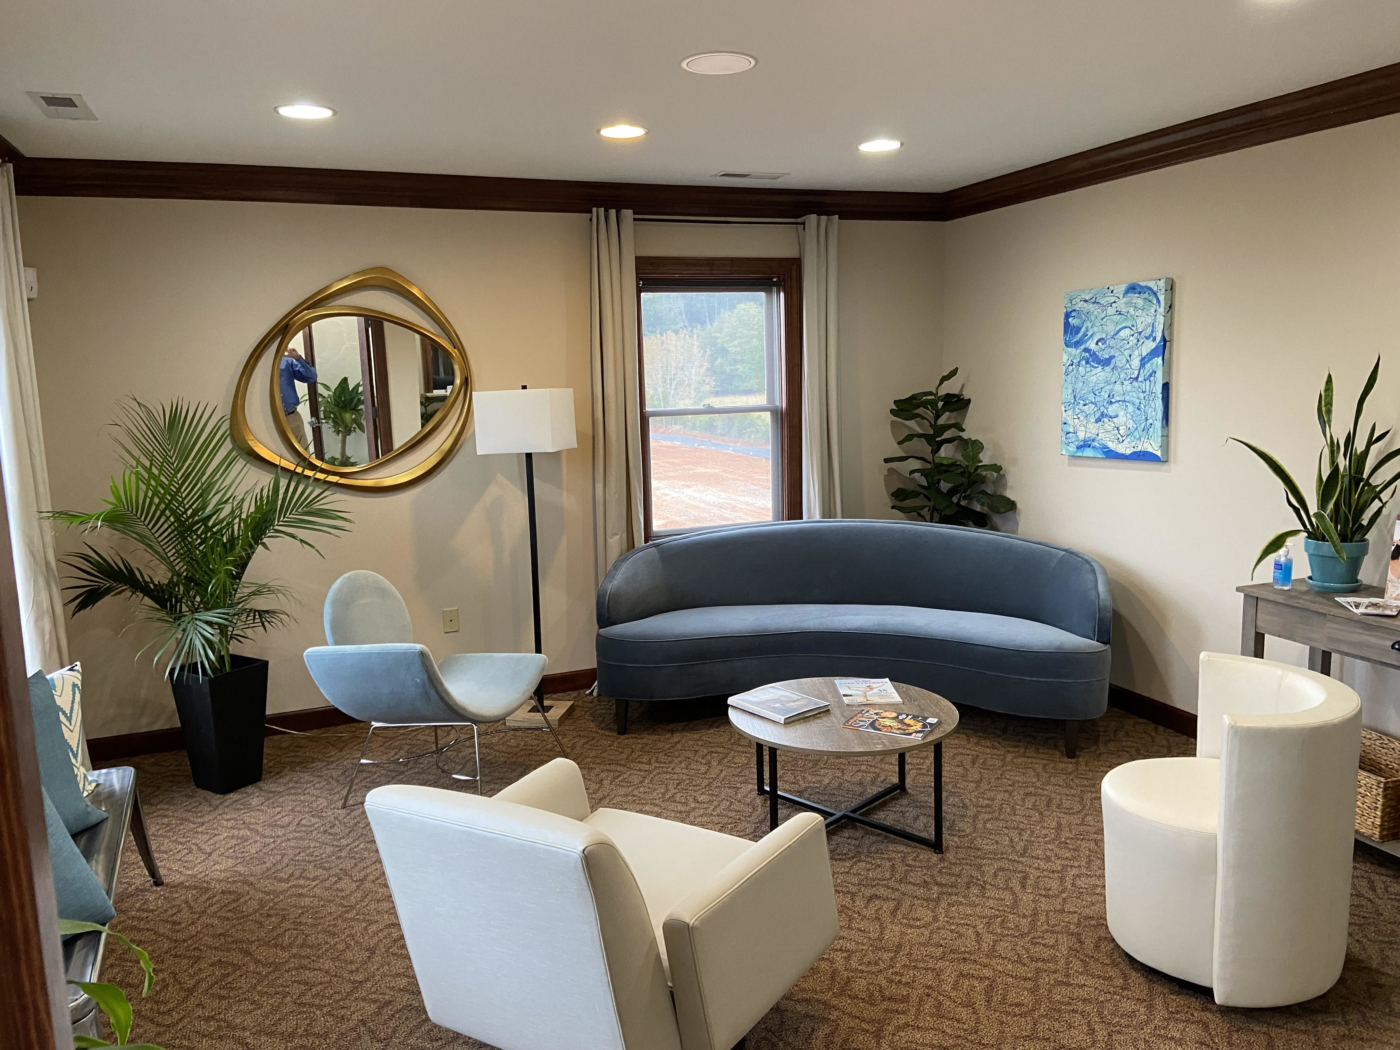 Carolina Health & Aesthetics waiting room